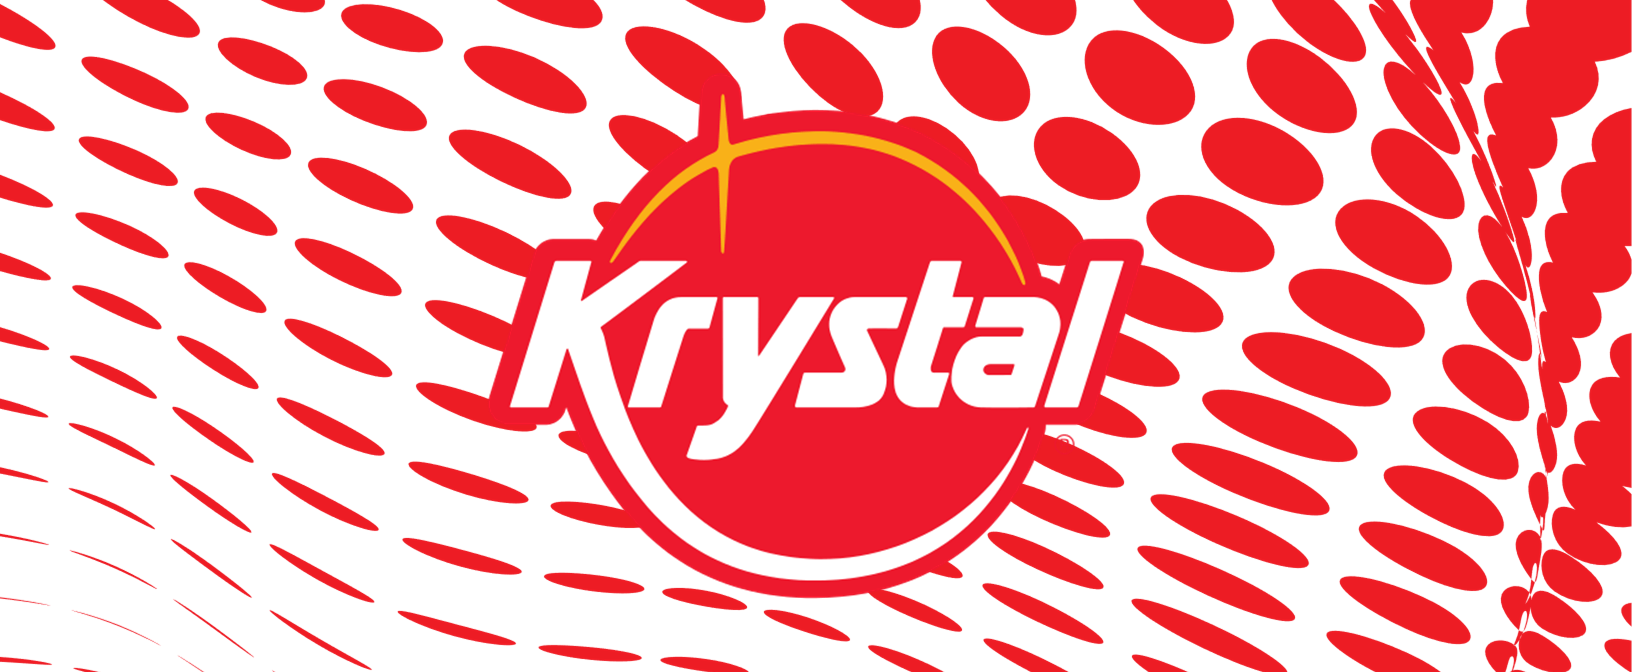 Brandmark Advertising Launches The Krystal Challenge Contest